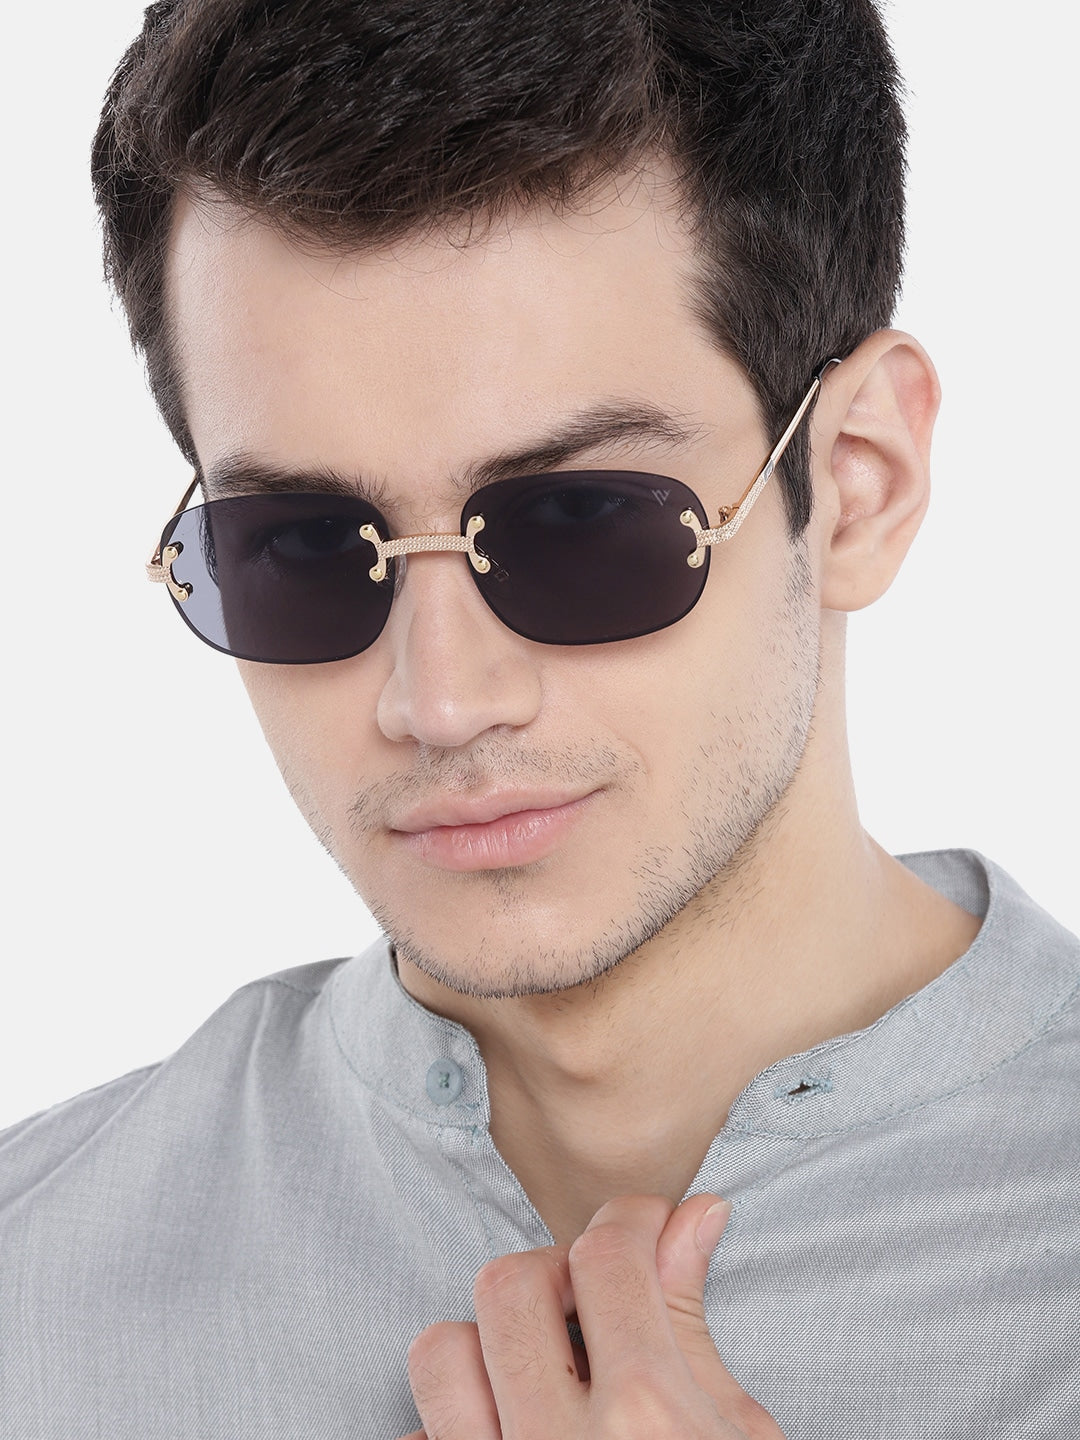 Voyage Black Rimless Sunglasses - MG3610